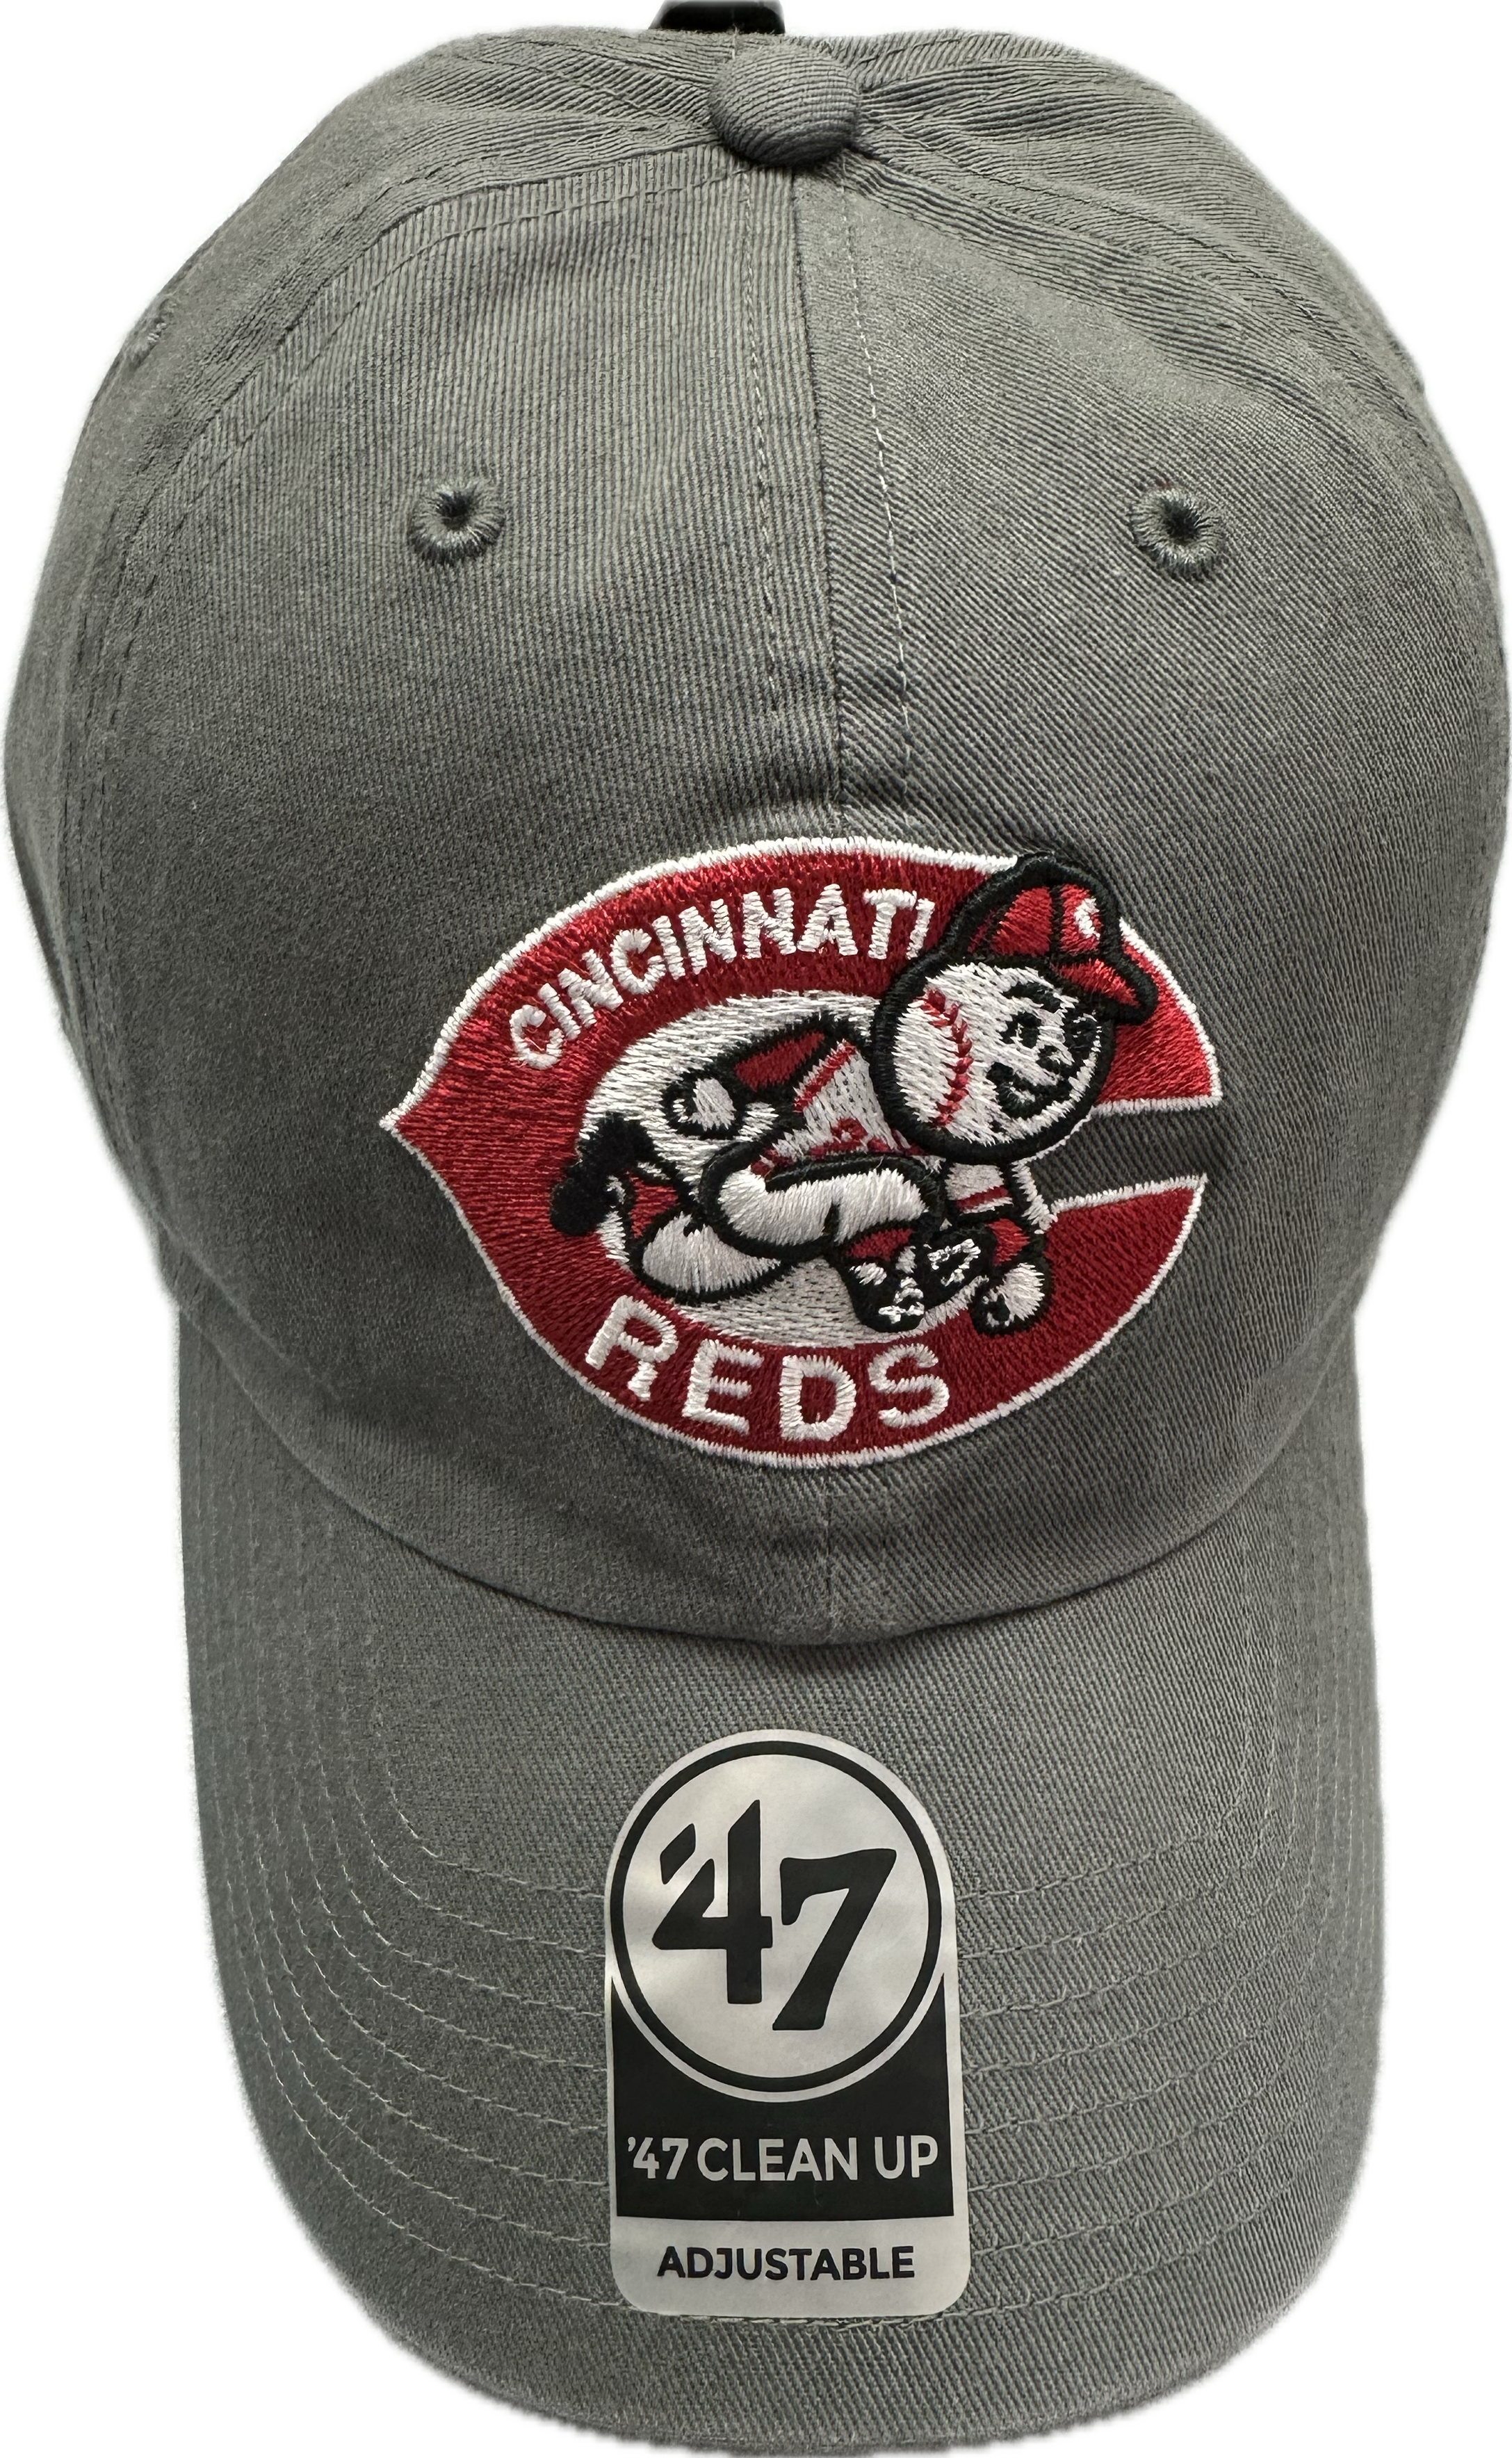 Camiseta de béisbol Cooperstown para hombre MLB Cincinnati Reds.